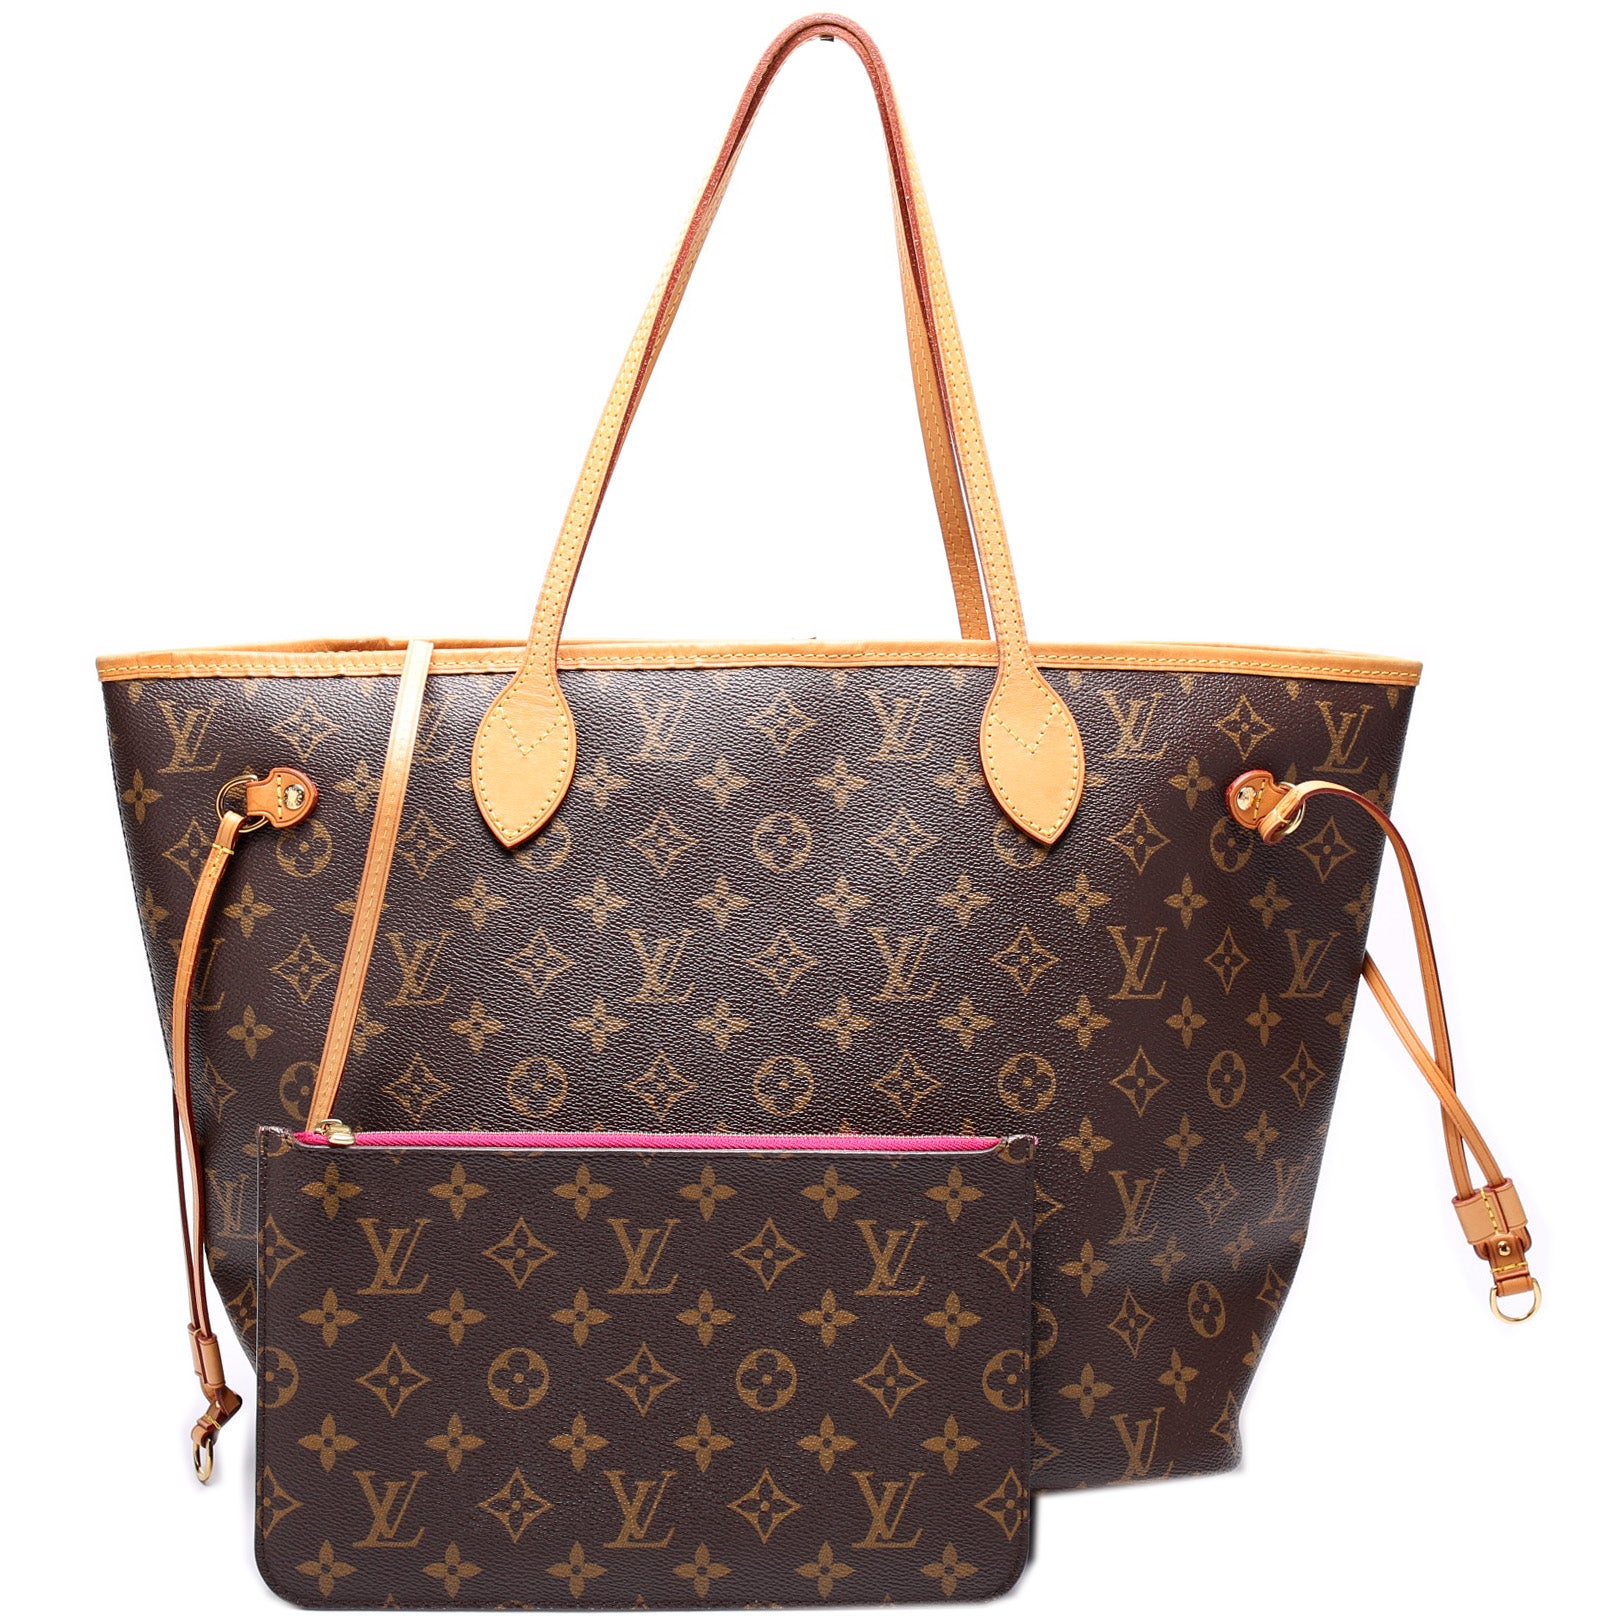 Louis Vuitton Neverfull mm in Monogram Handbag - Authentic Pre-Owned Designer Handbags